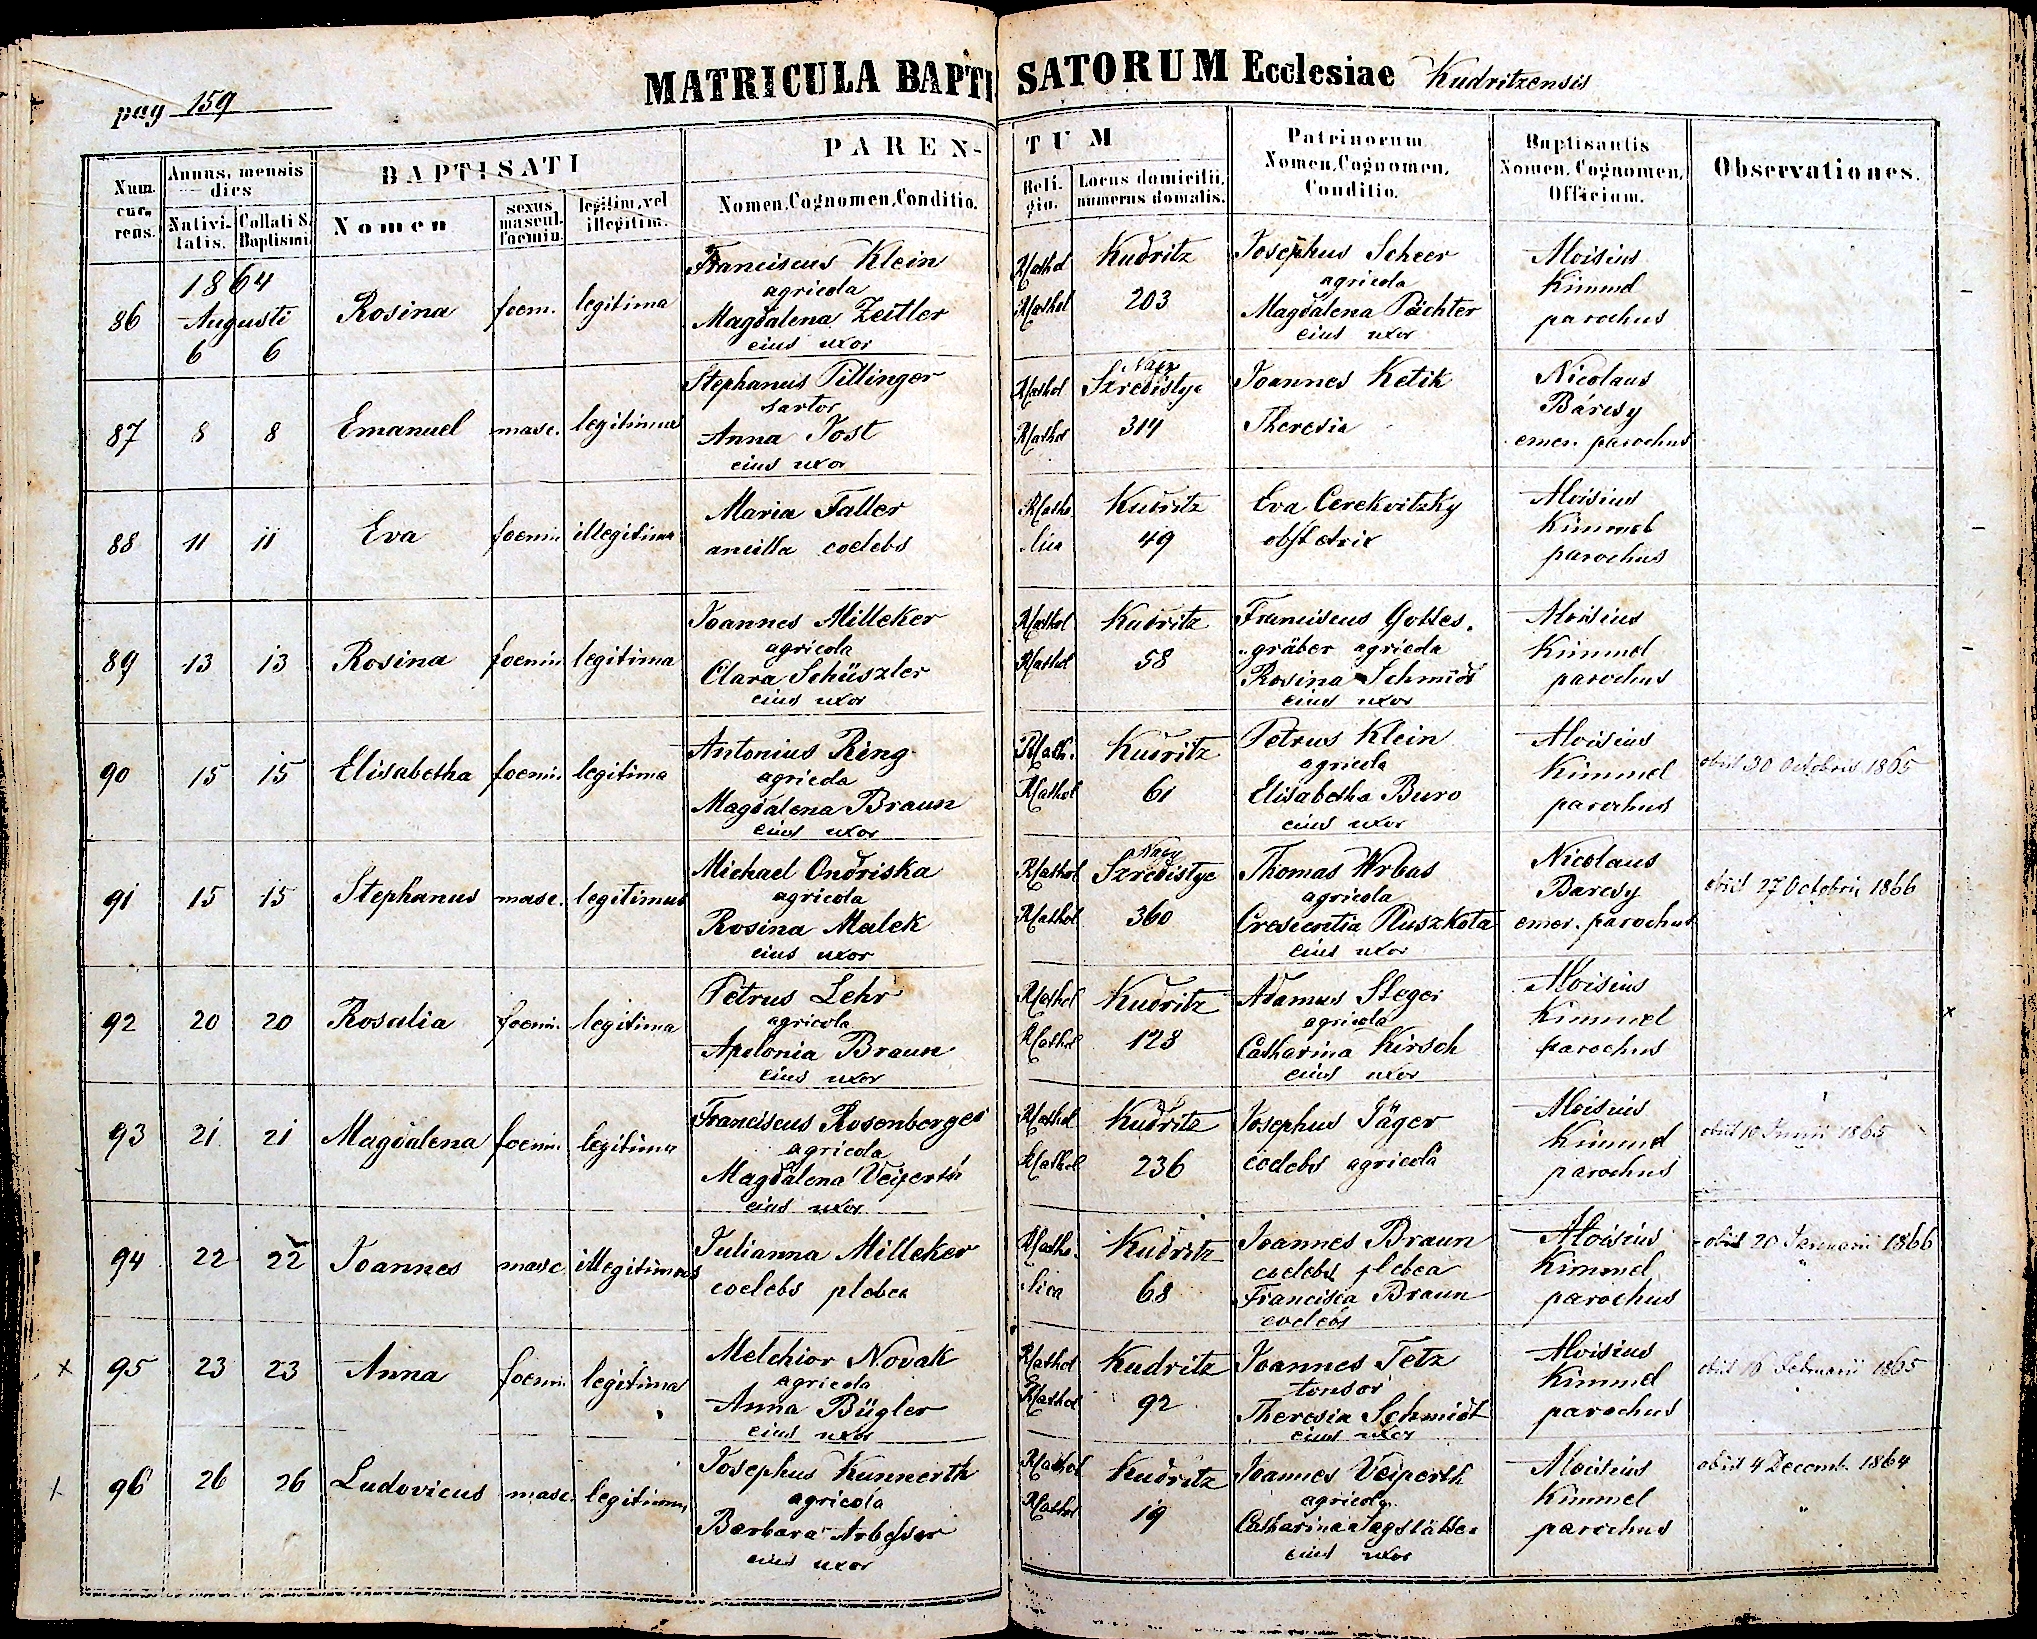 images/church_records/BIRTHS/1852-1870B/159